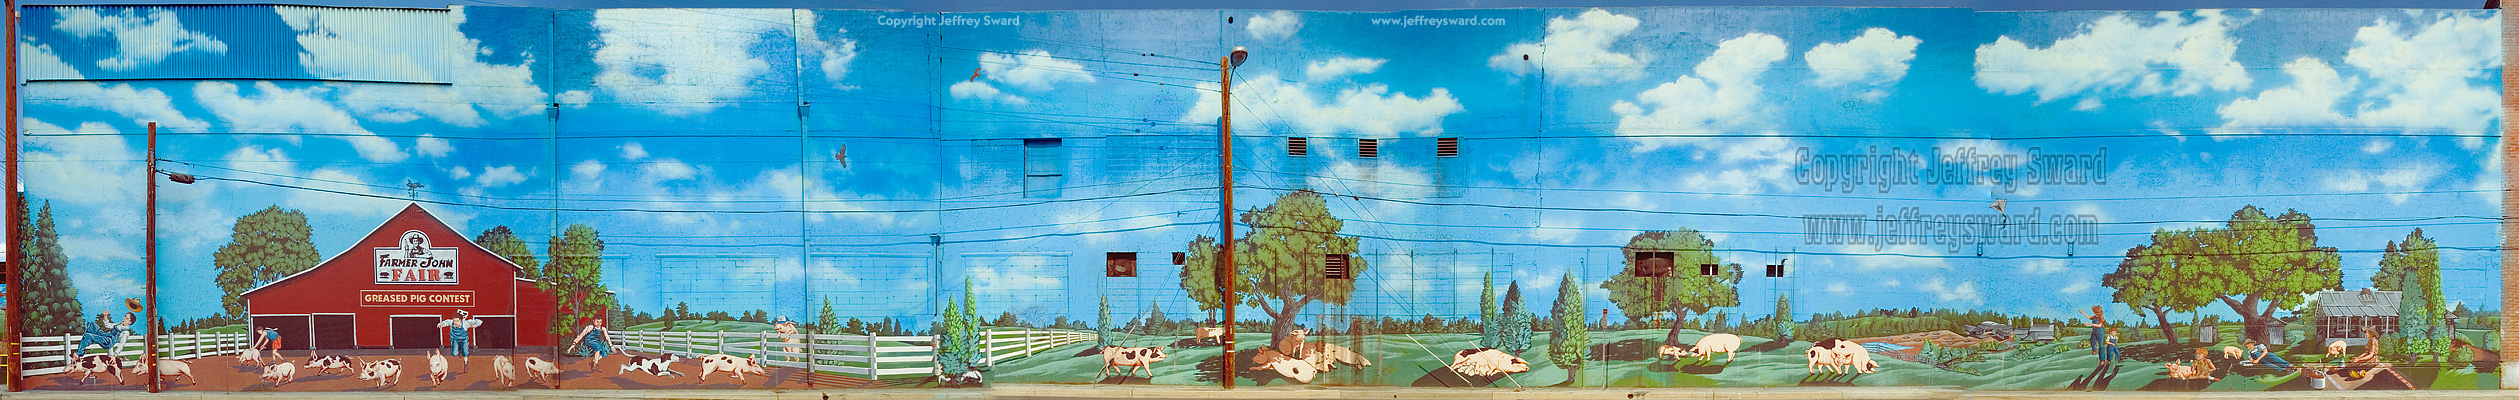 Farmer John Packing Plant Murals Los Angeles California Photograph by Jeffrey Sward